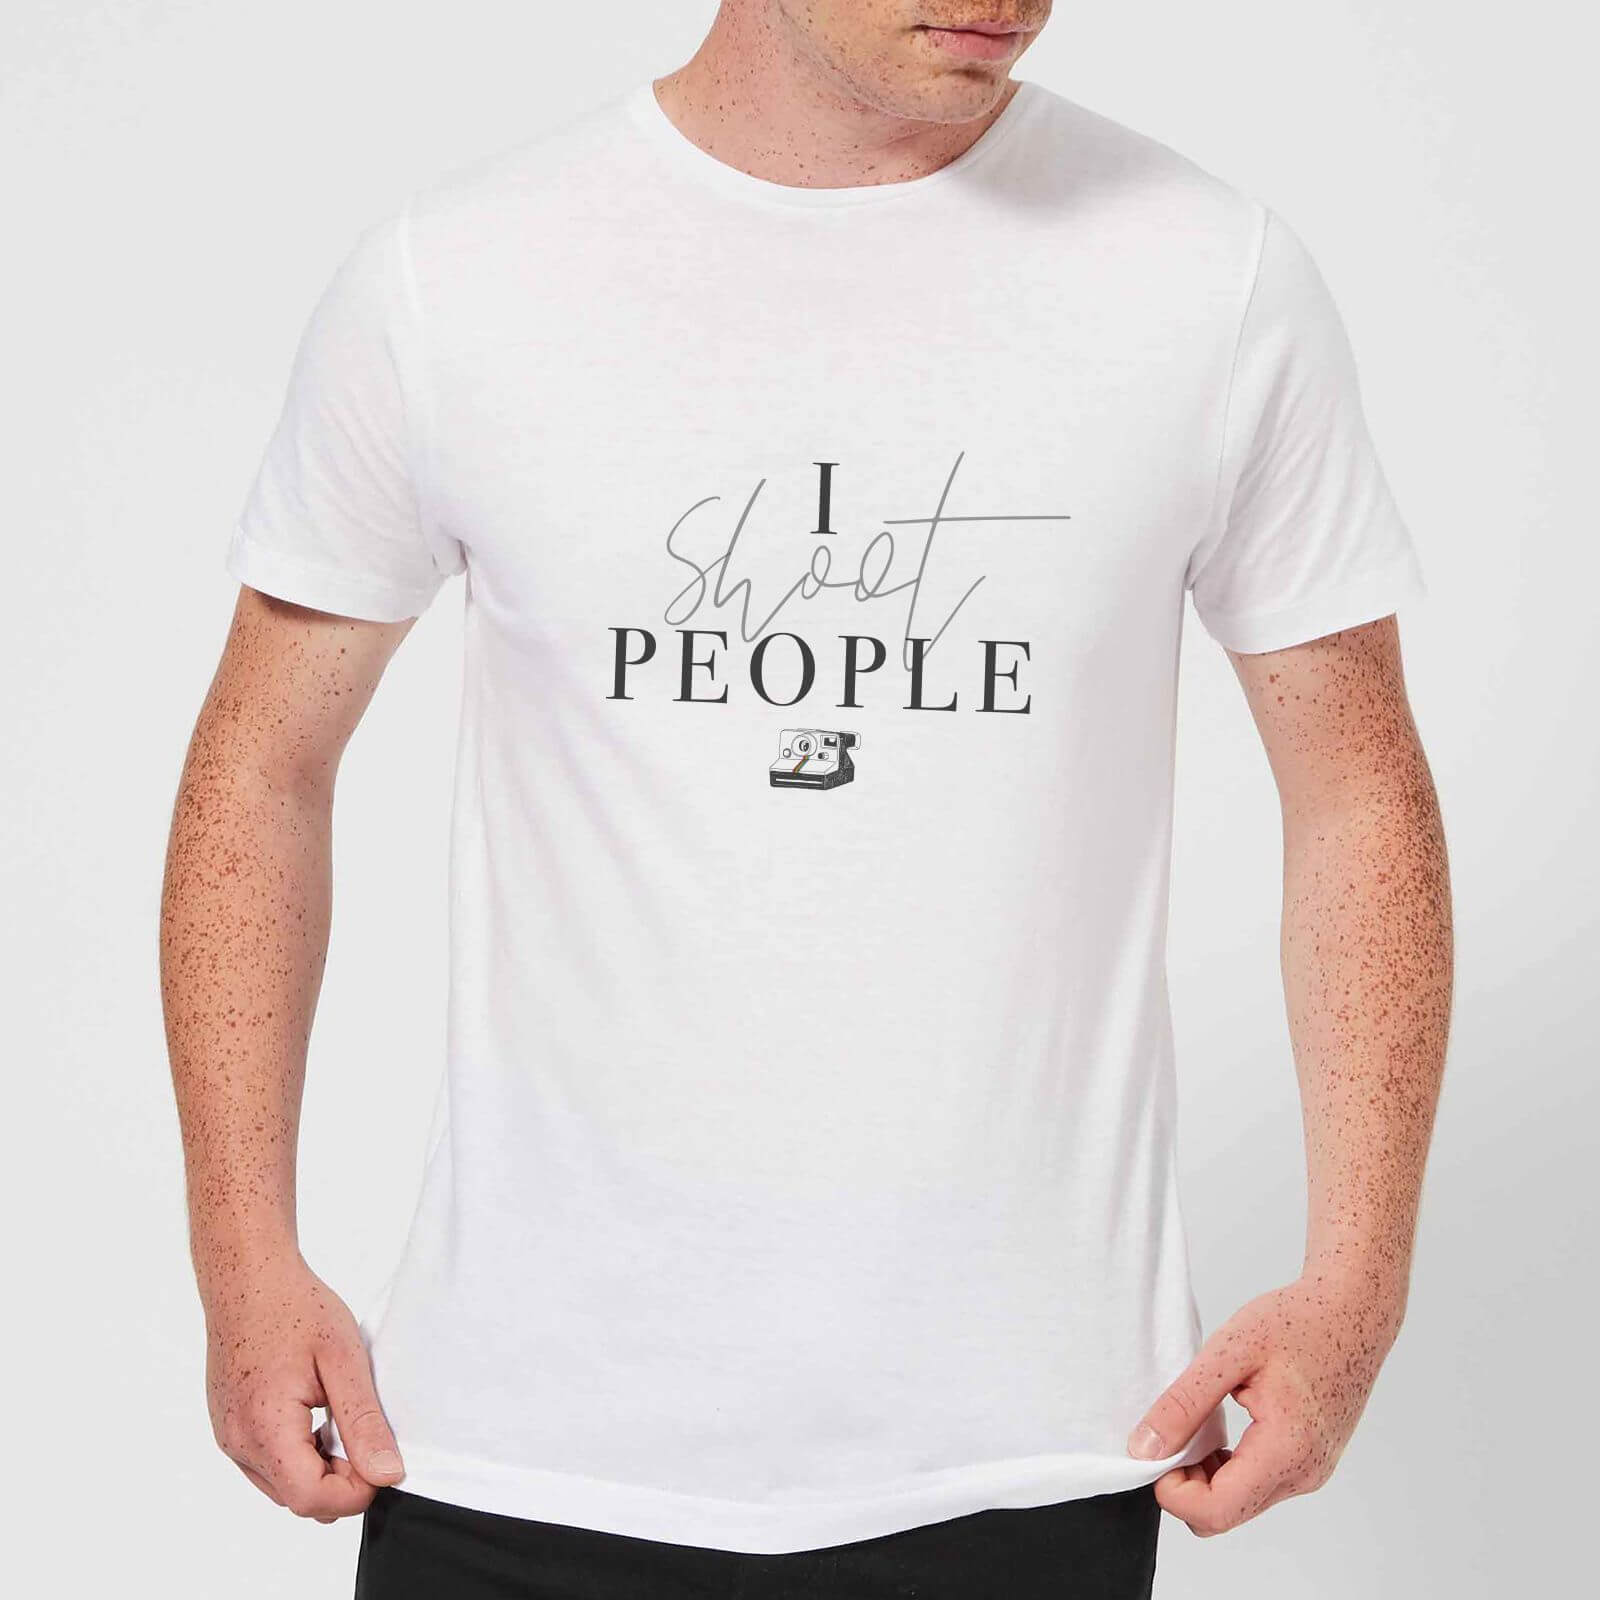 I Shoot People T-Shirt - White - XXL - White